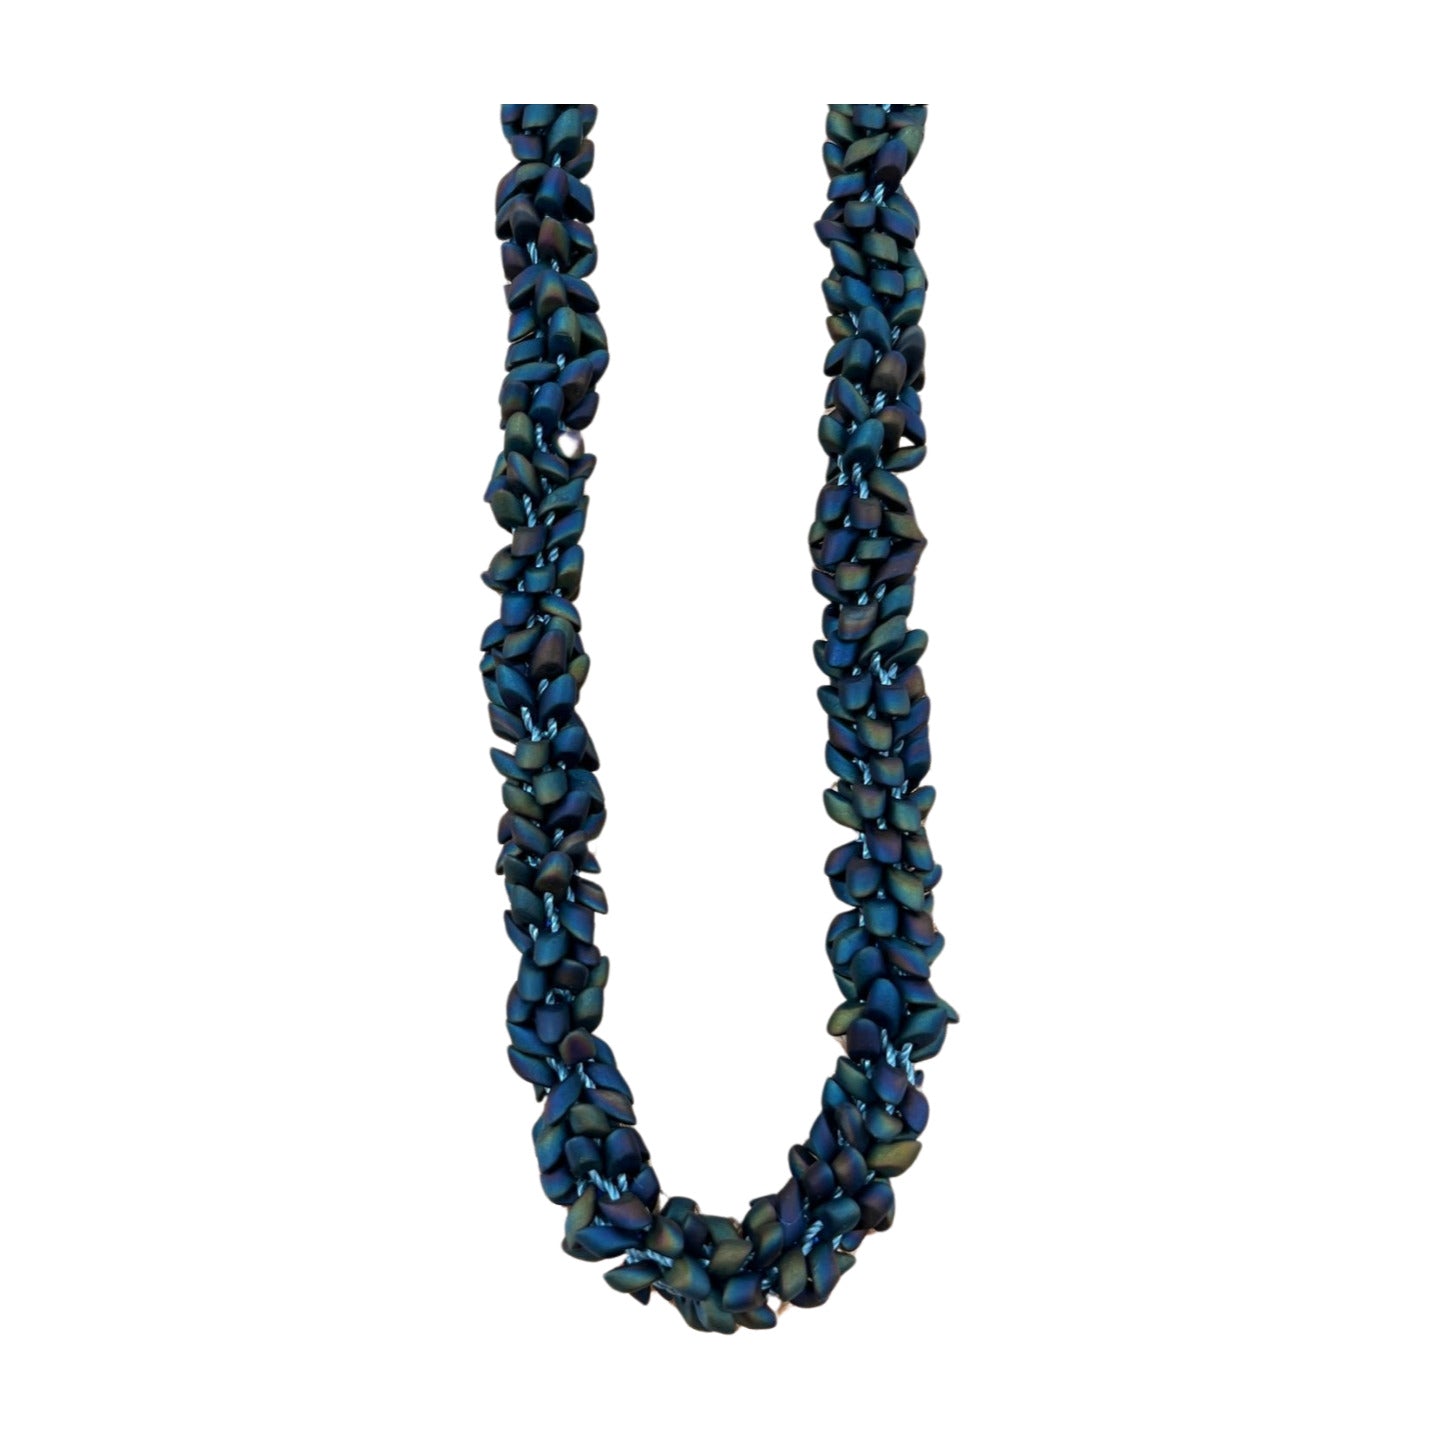 Pop-Up Mākeke - Akalei Designs - Matte Blue Rainbow Dragon Scales Necklace Lei - 32-33in - Close Up